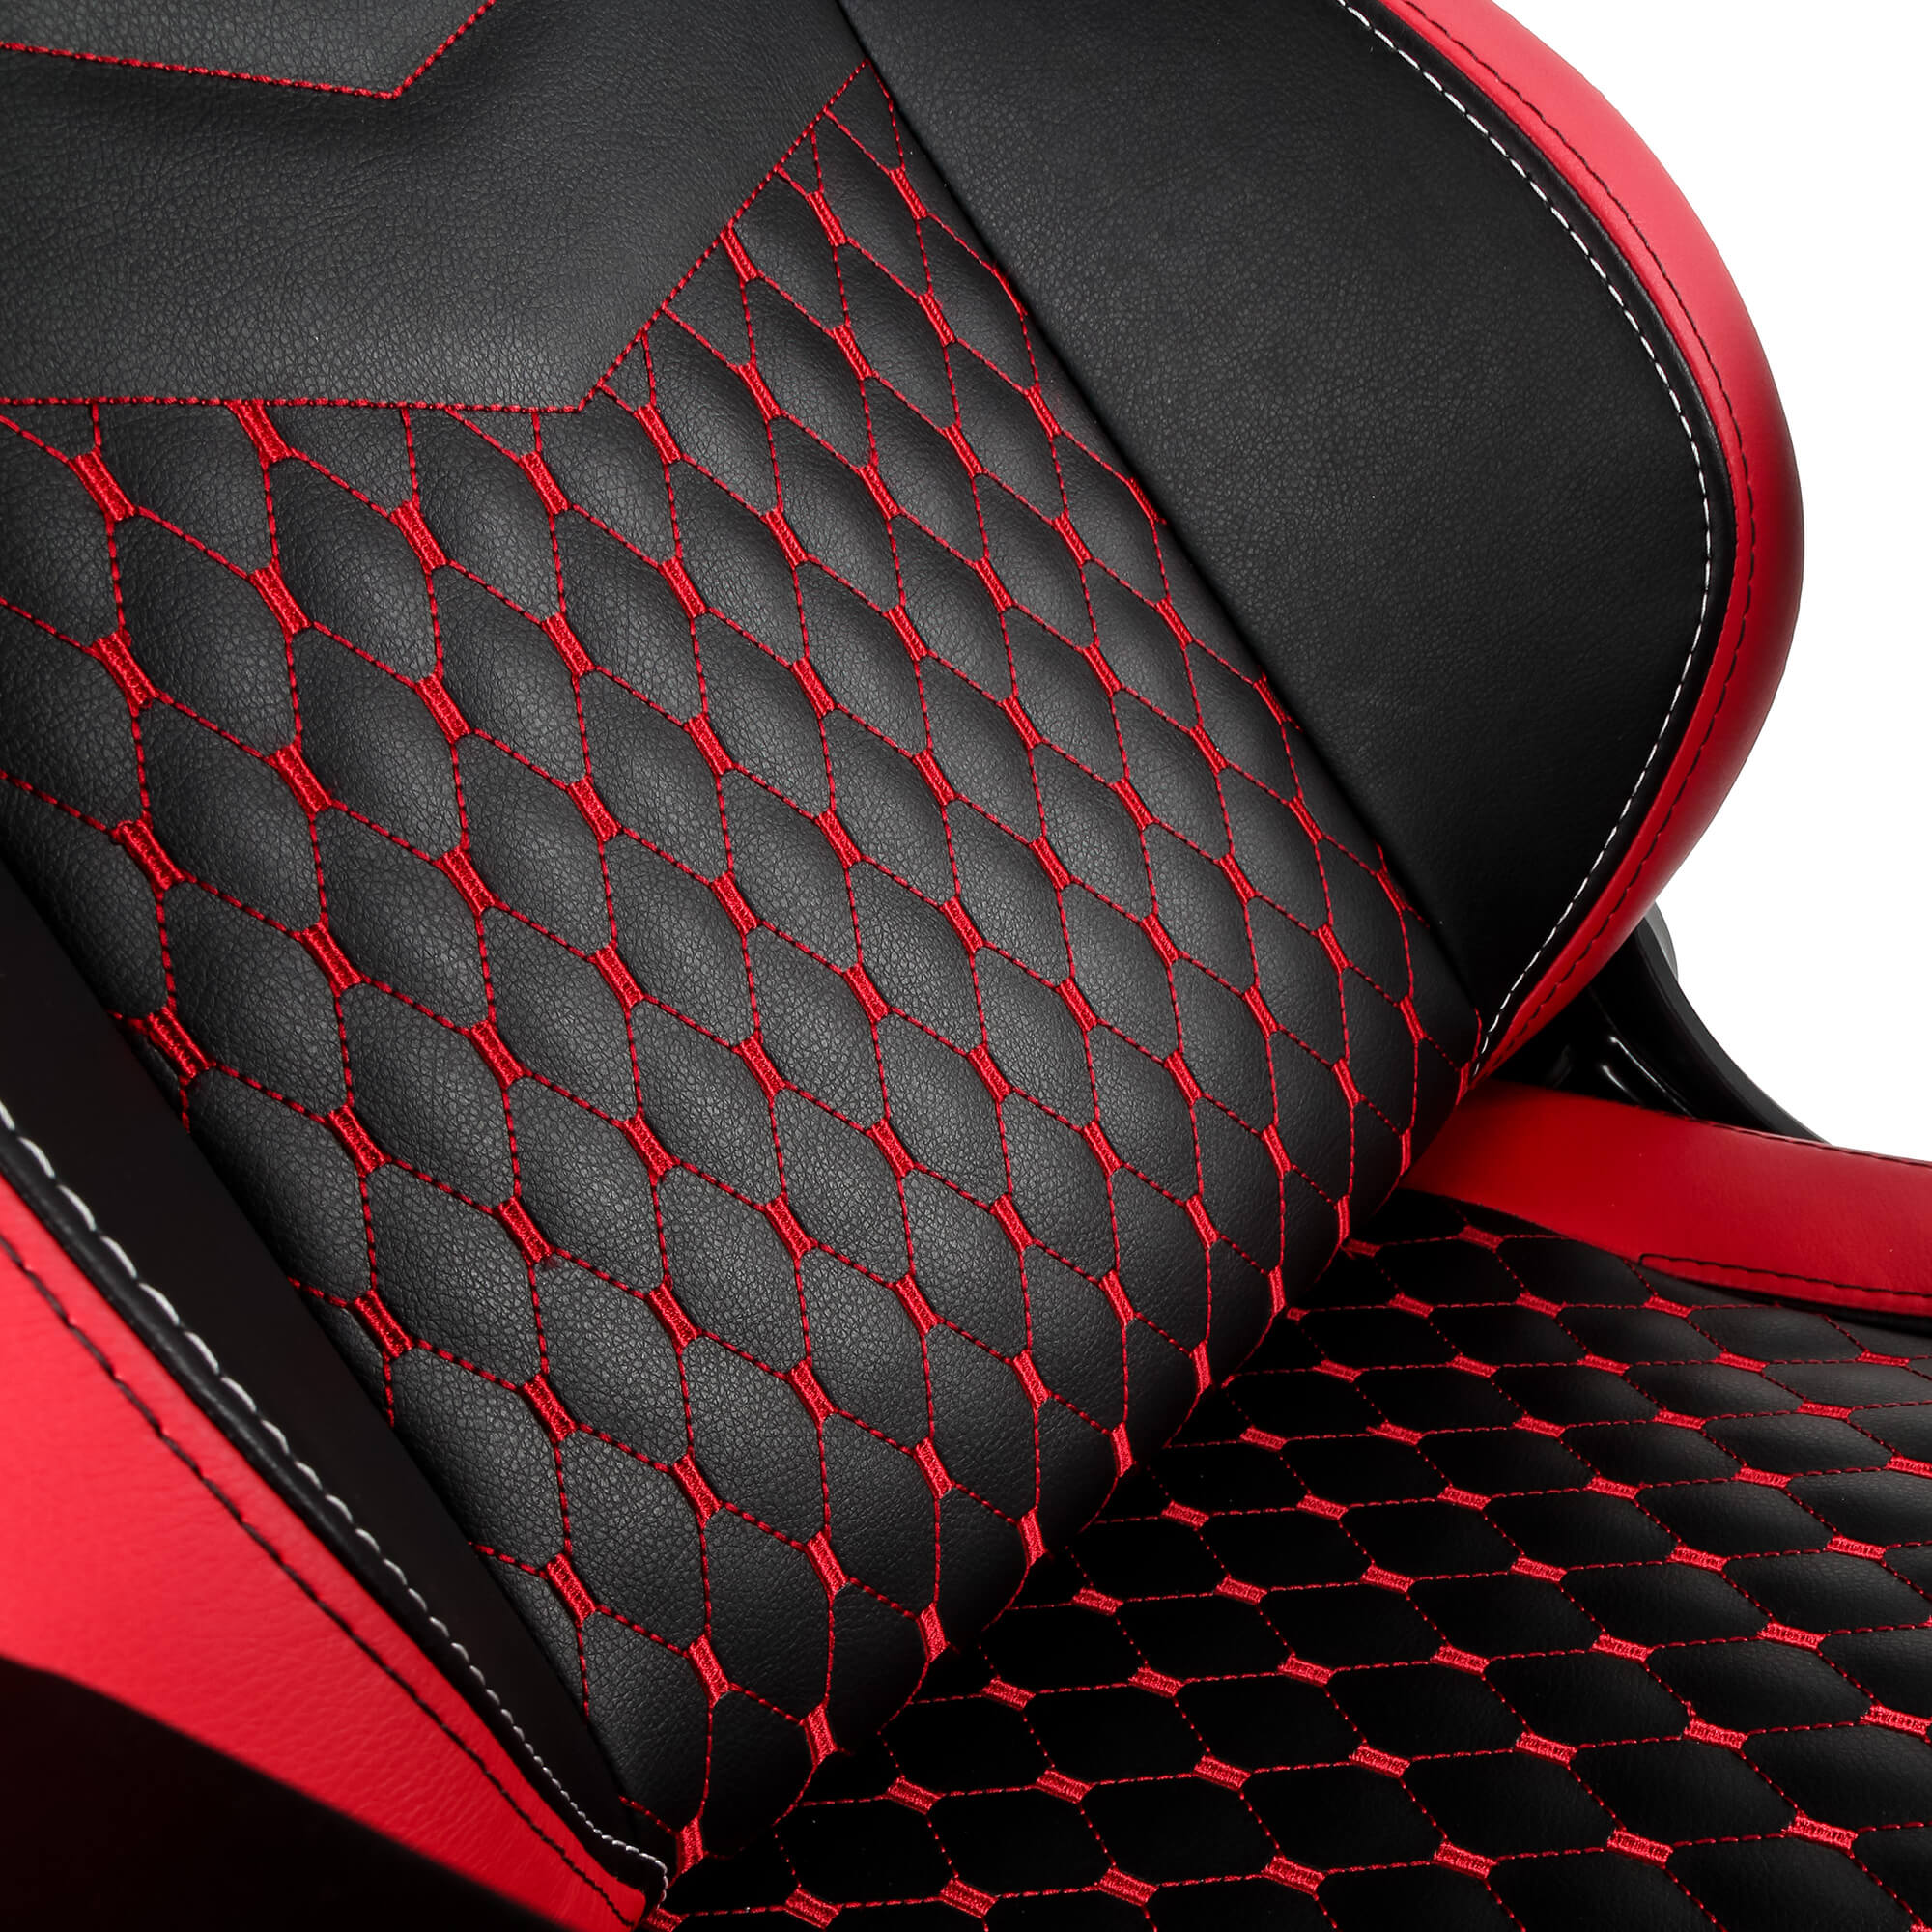 noblechairs - ** B Grade ** Cadeira noblechairs EPIC PU Leather mousesports Edition Preto / Vermelho